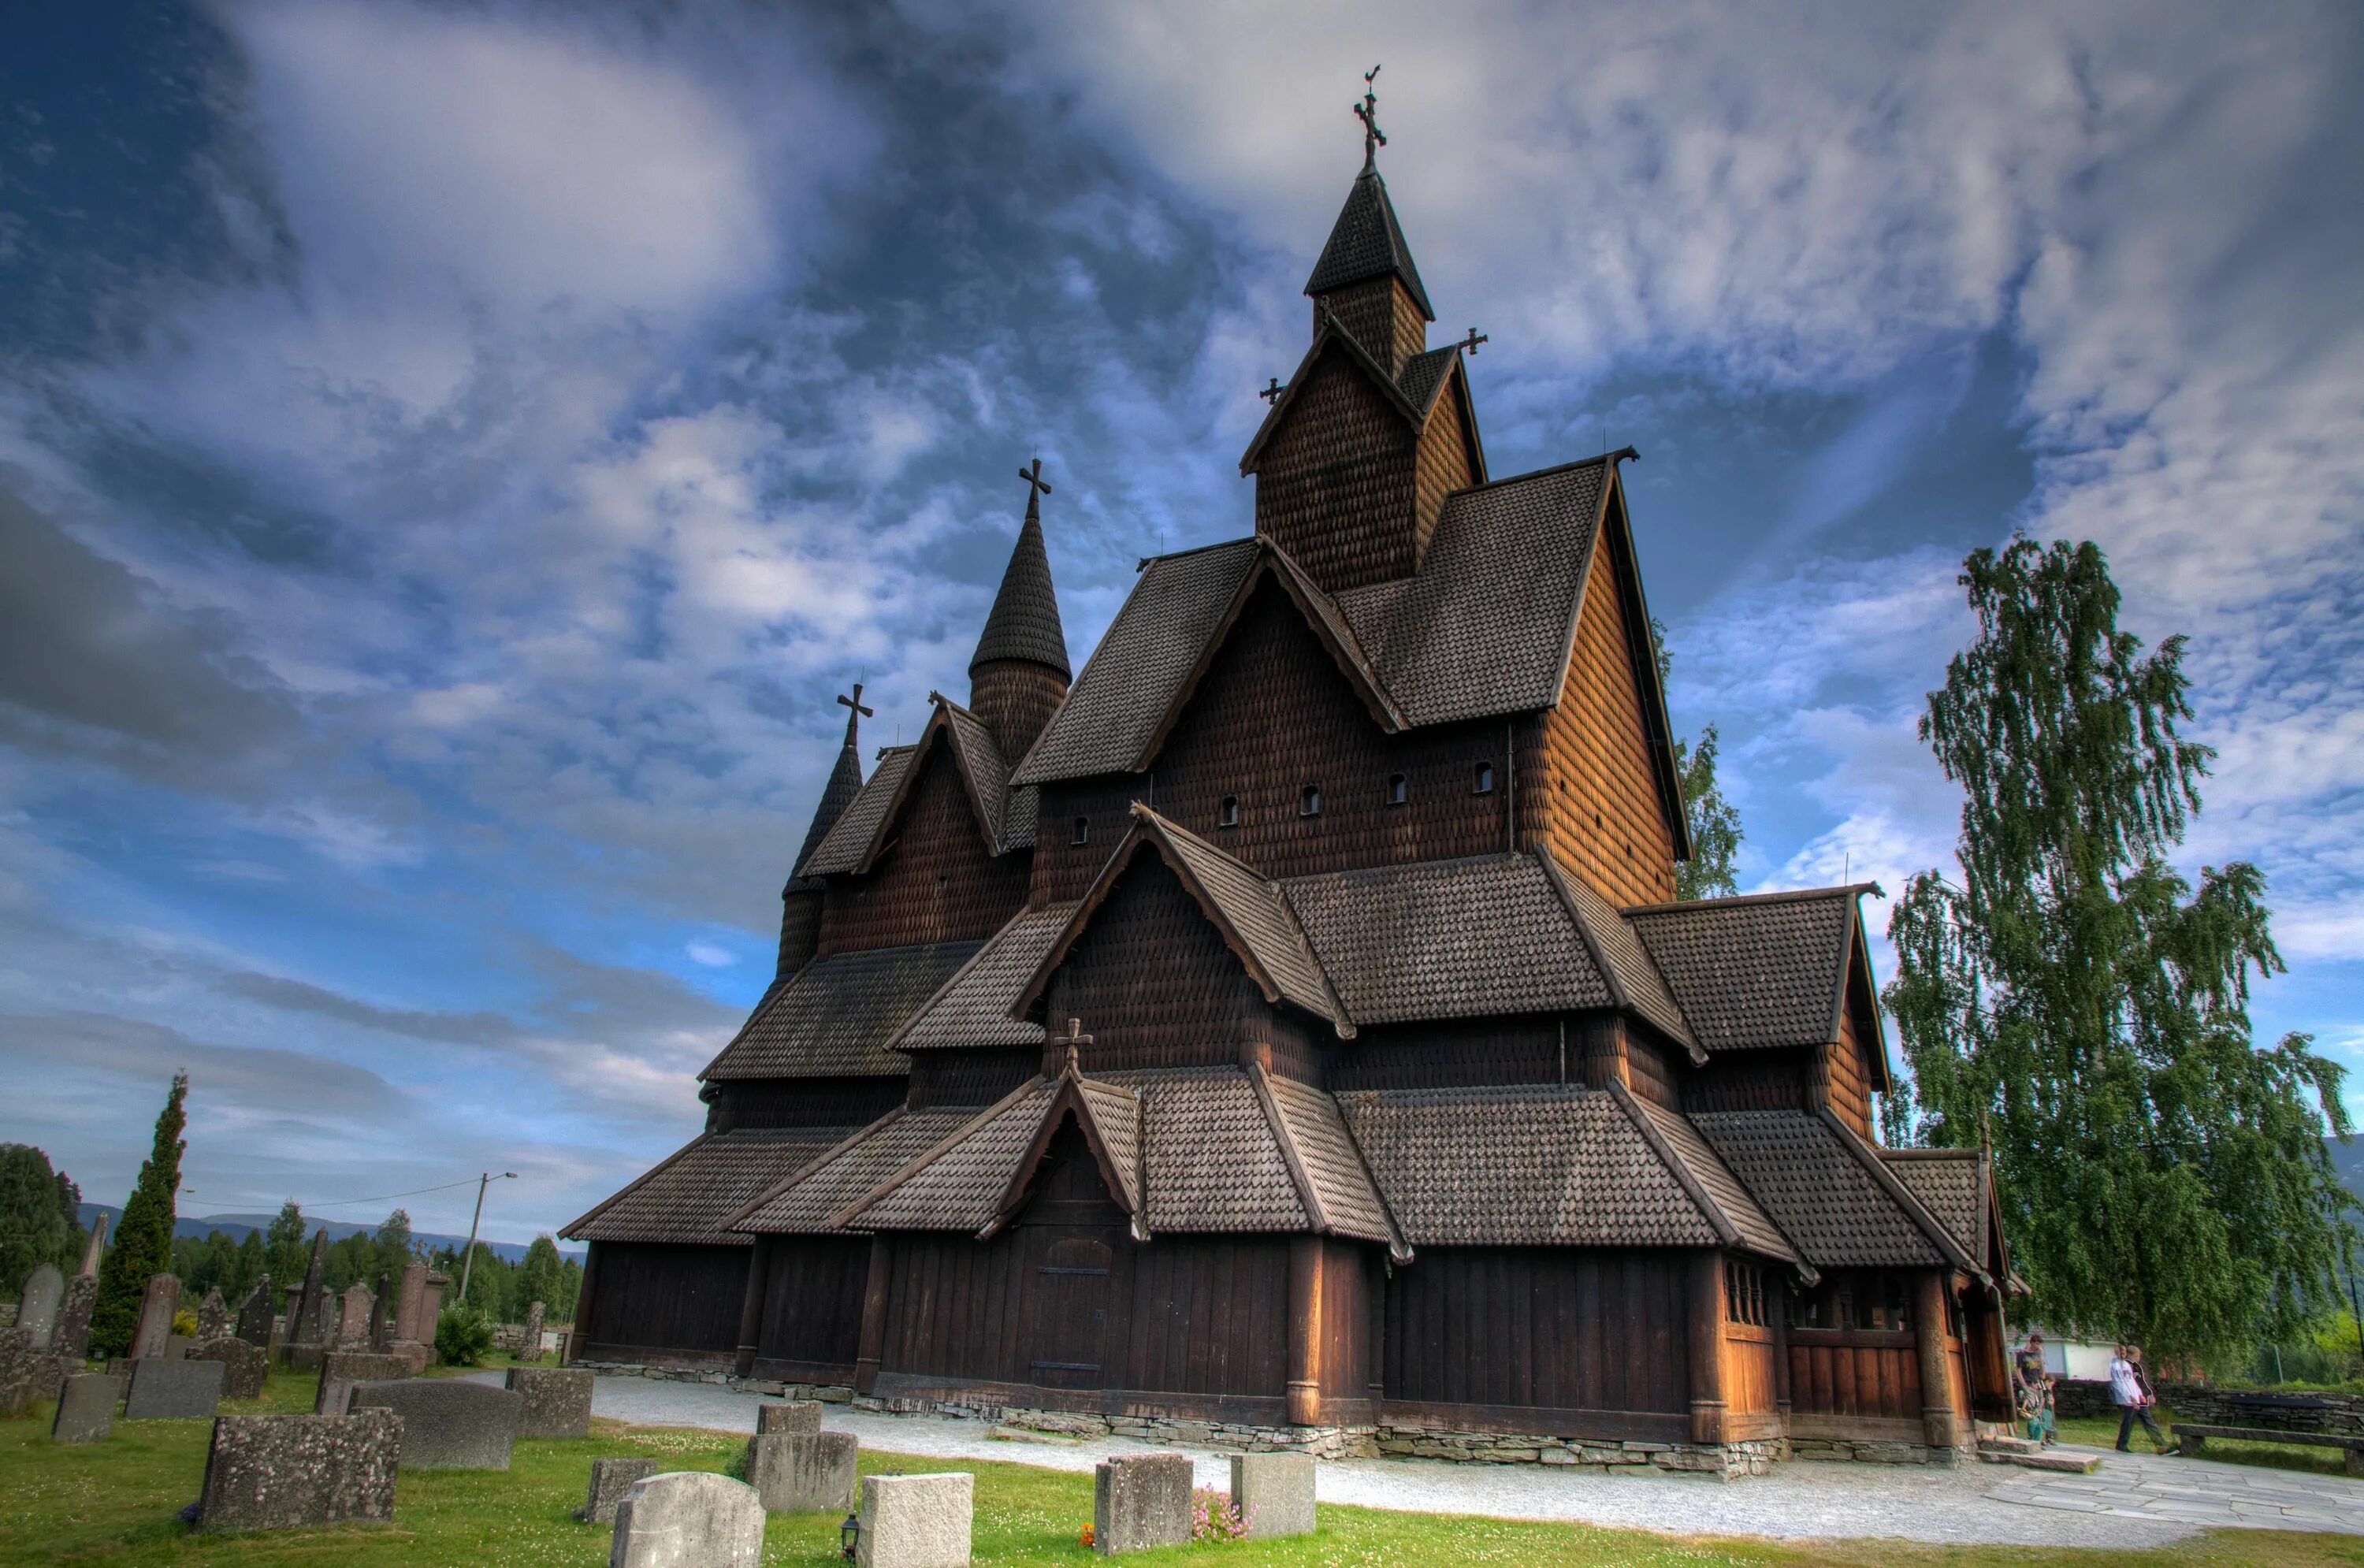 Wooden church. Церковь Боргунд в Норвегии. Хеддаль деревянная Церковь Норвегия. Ставкирка в Хеддале. Ставкирка Норвегия.